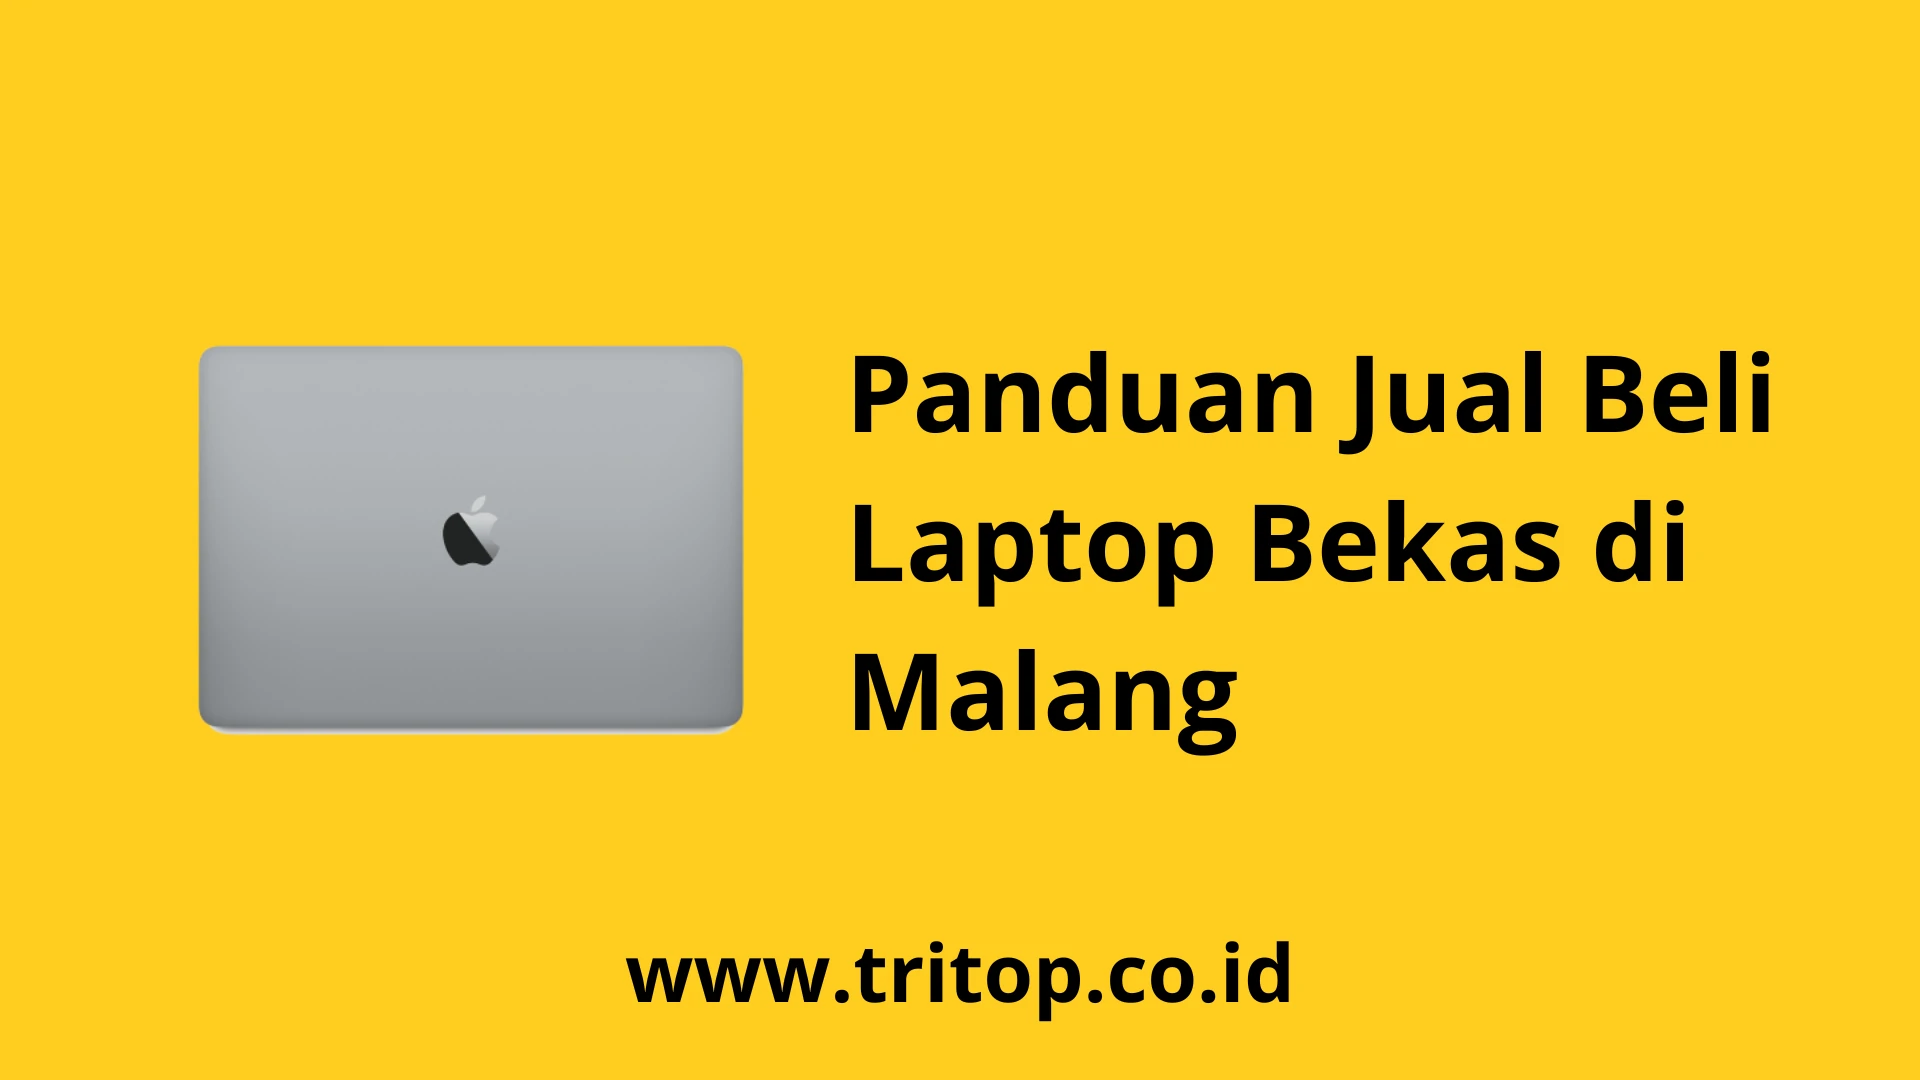 Jual Laptop Bekas di Malang Tritop.co.id